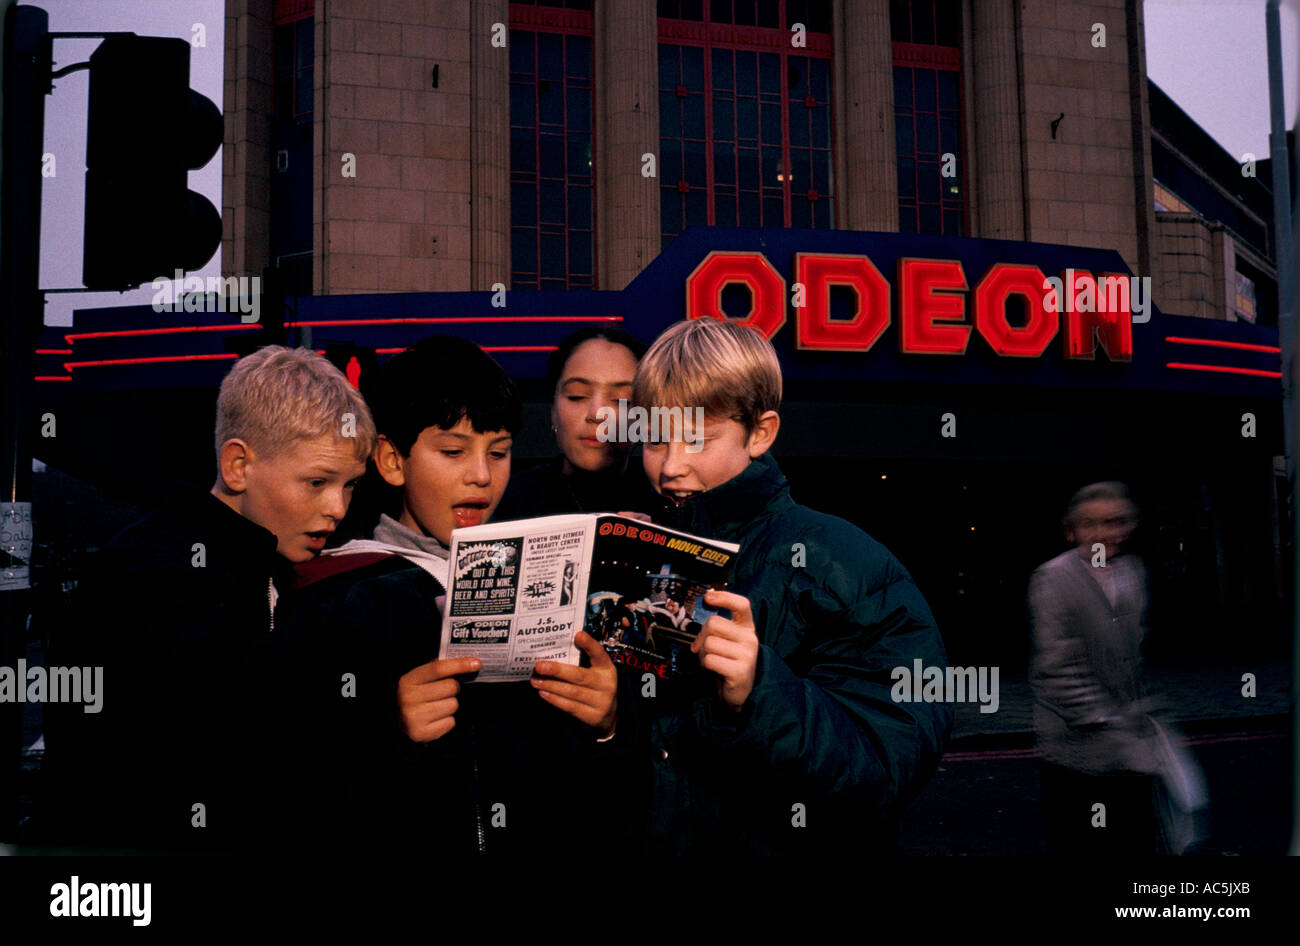 Young boys outside an Odeon cinema Stock Photo